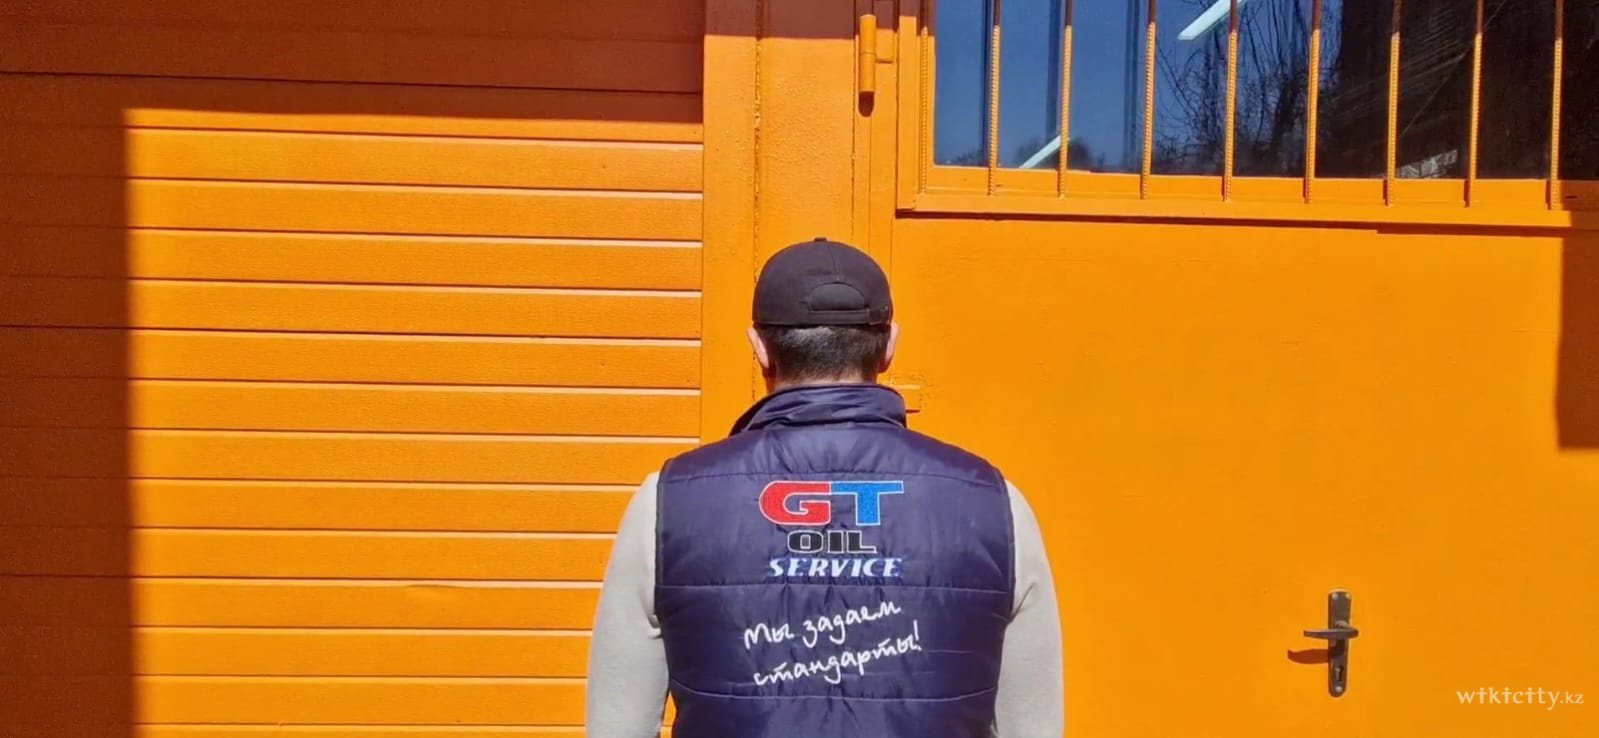 Фото GT oil service Пункт замены масла №16 - Almaty